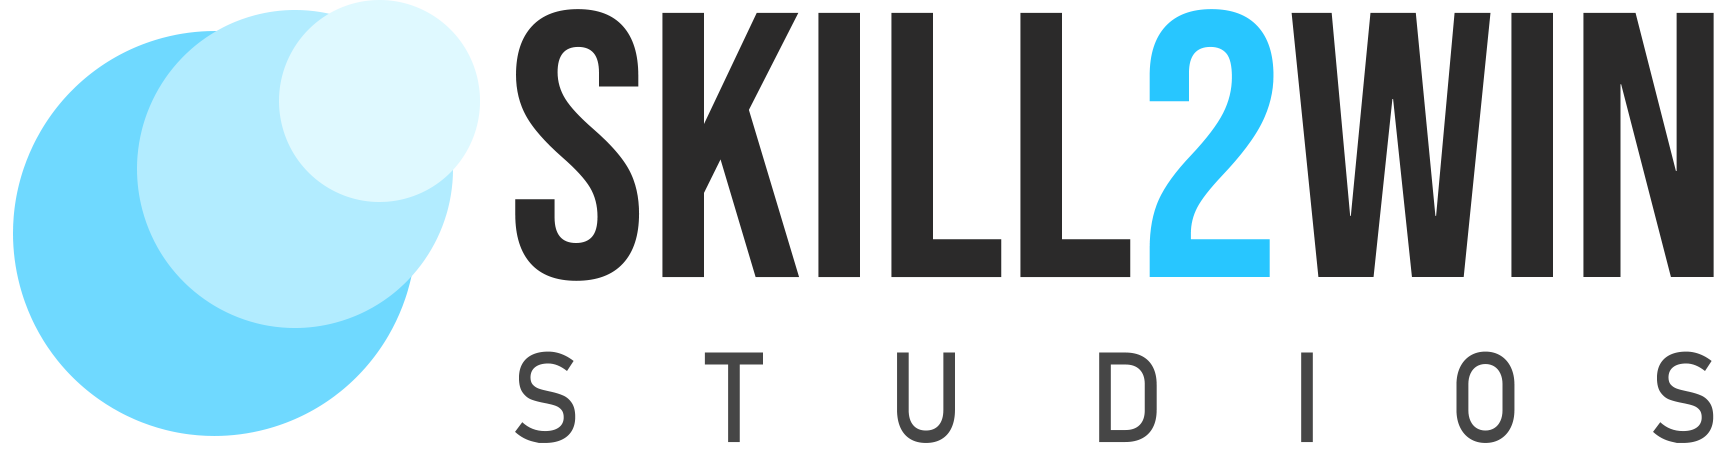 Skill2Win Studios